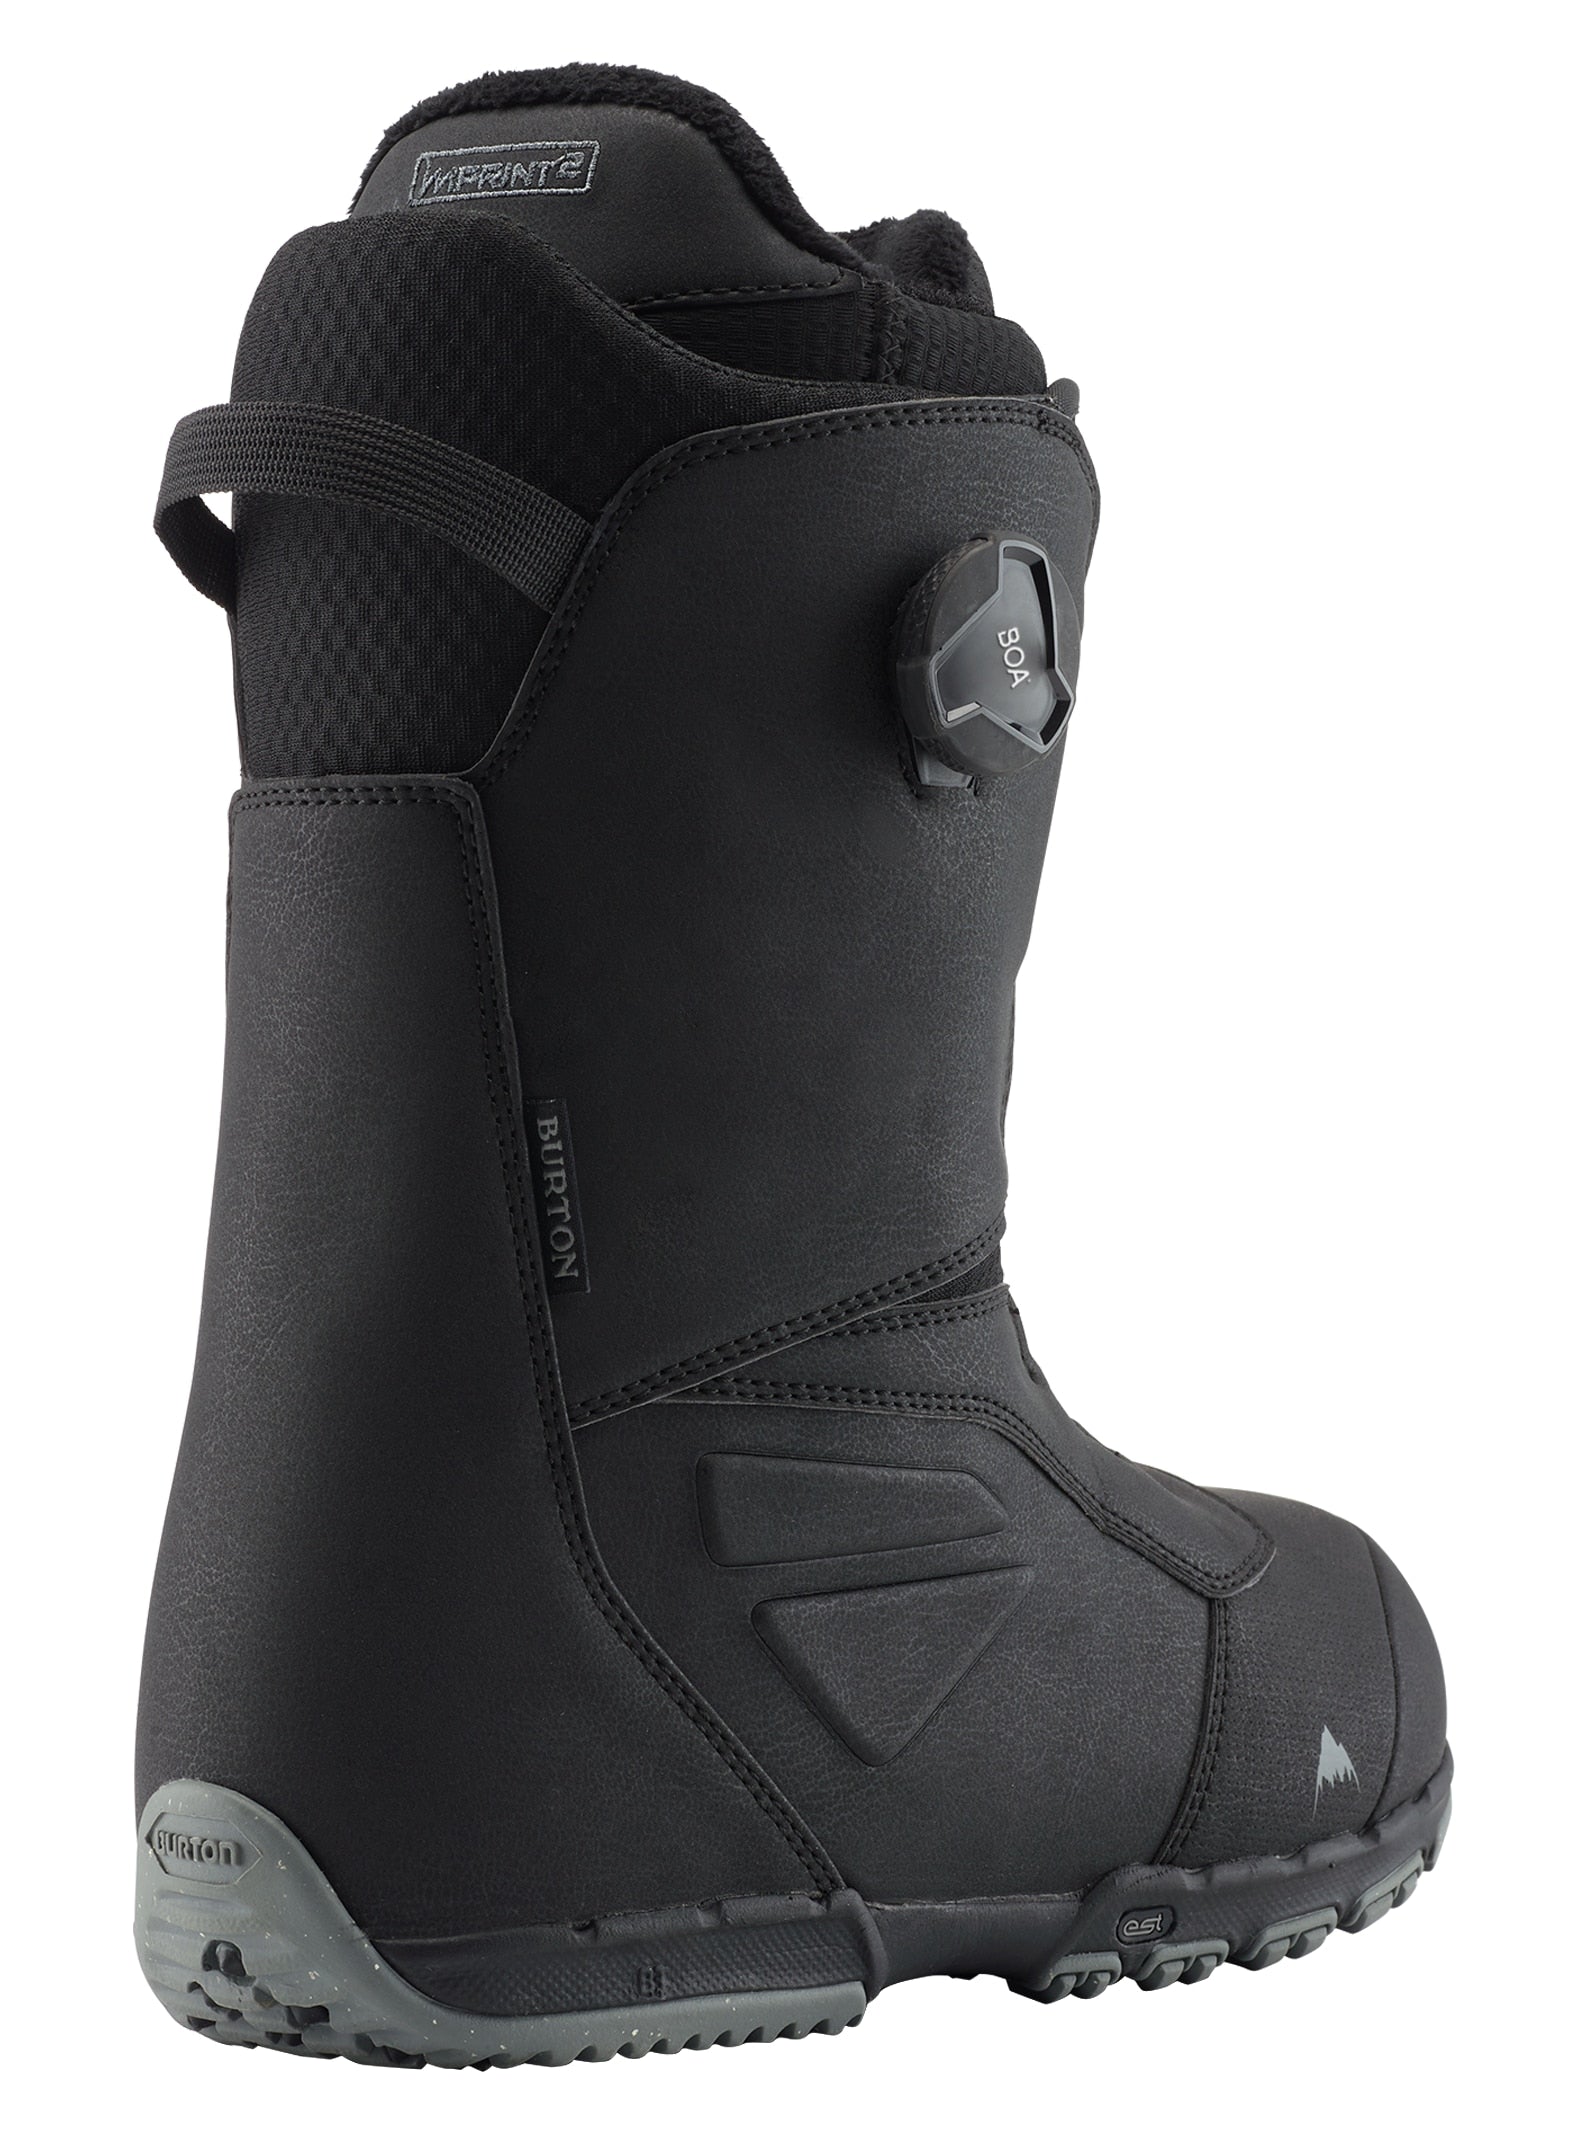 Men's Ruler BOA® Snowboard Boots - Black